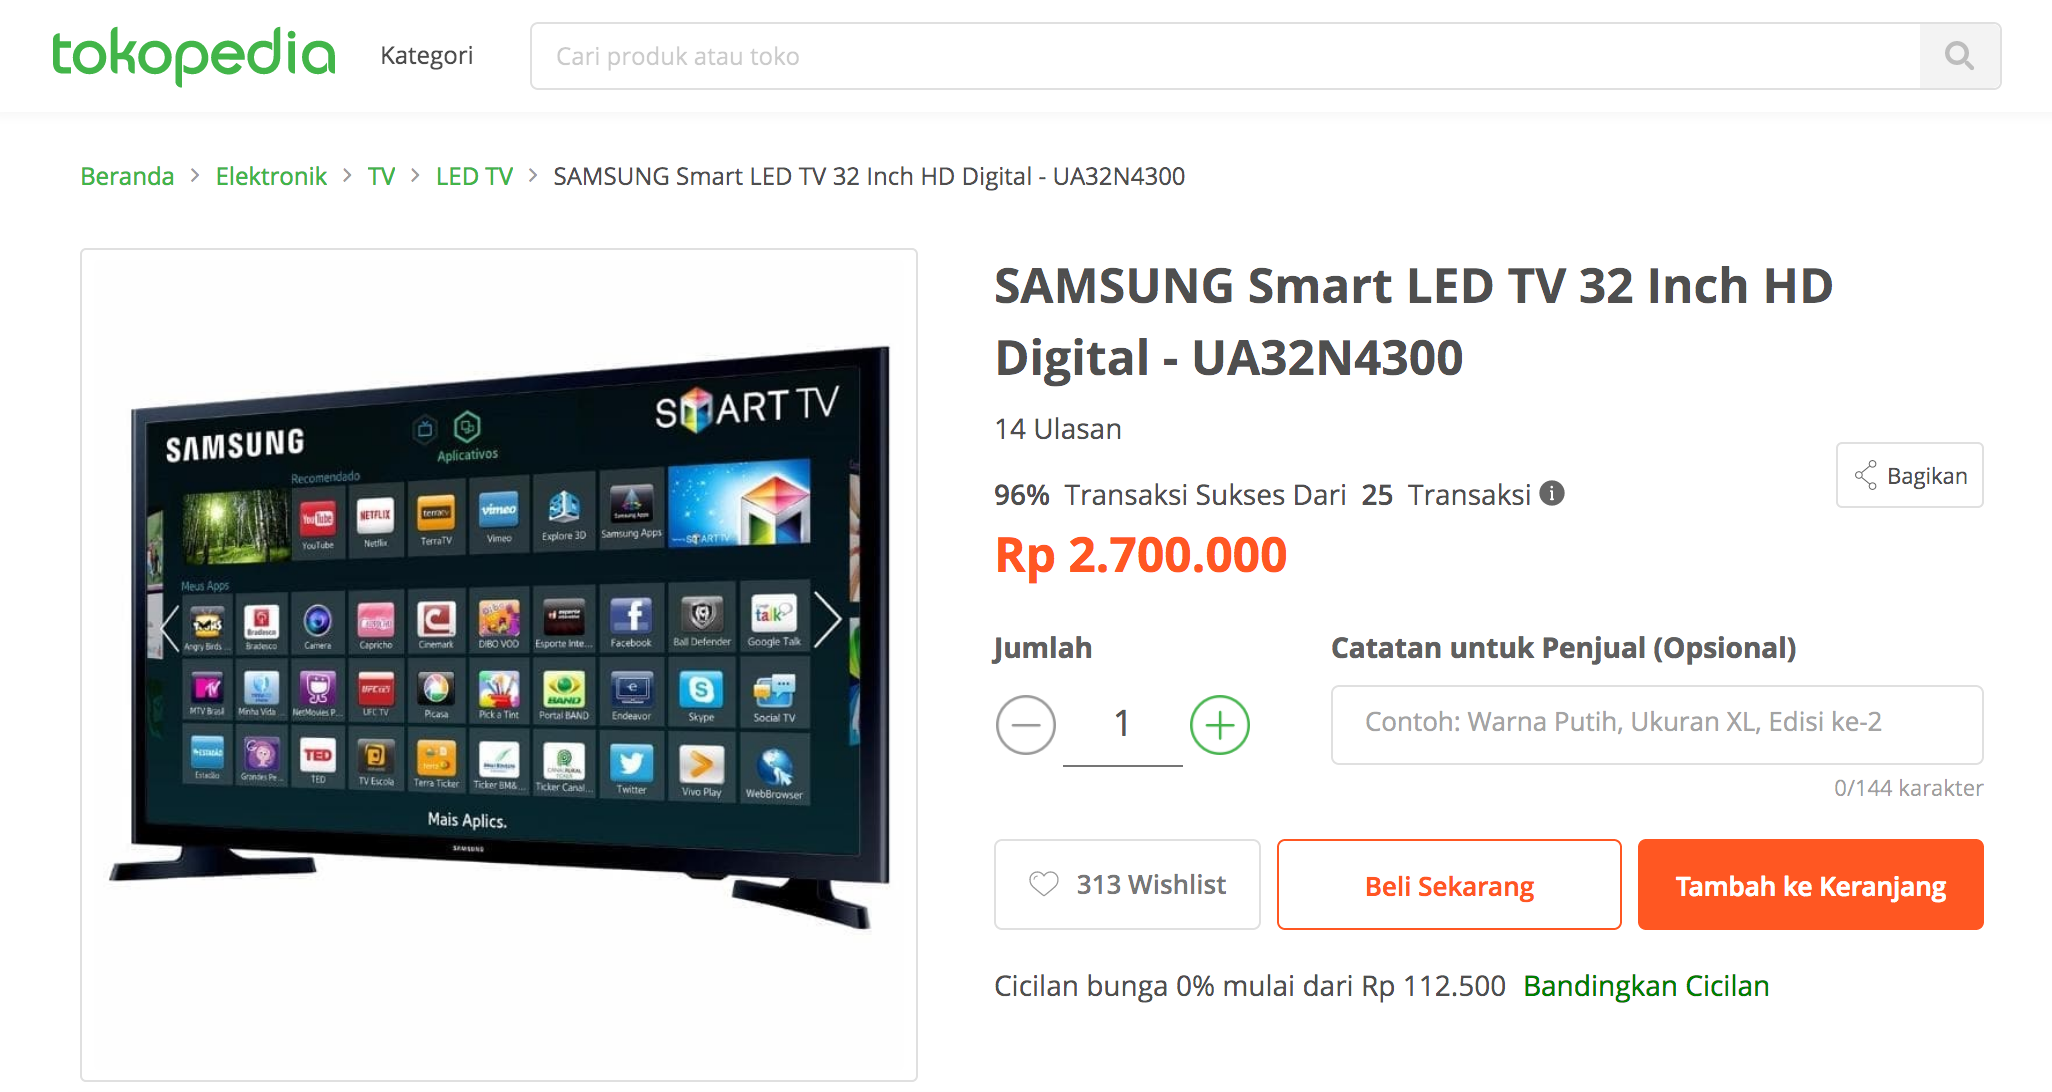 Samsung Smart TV 32